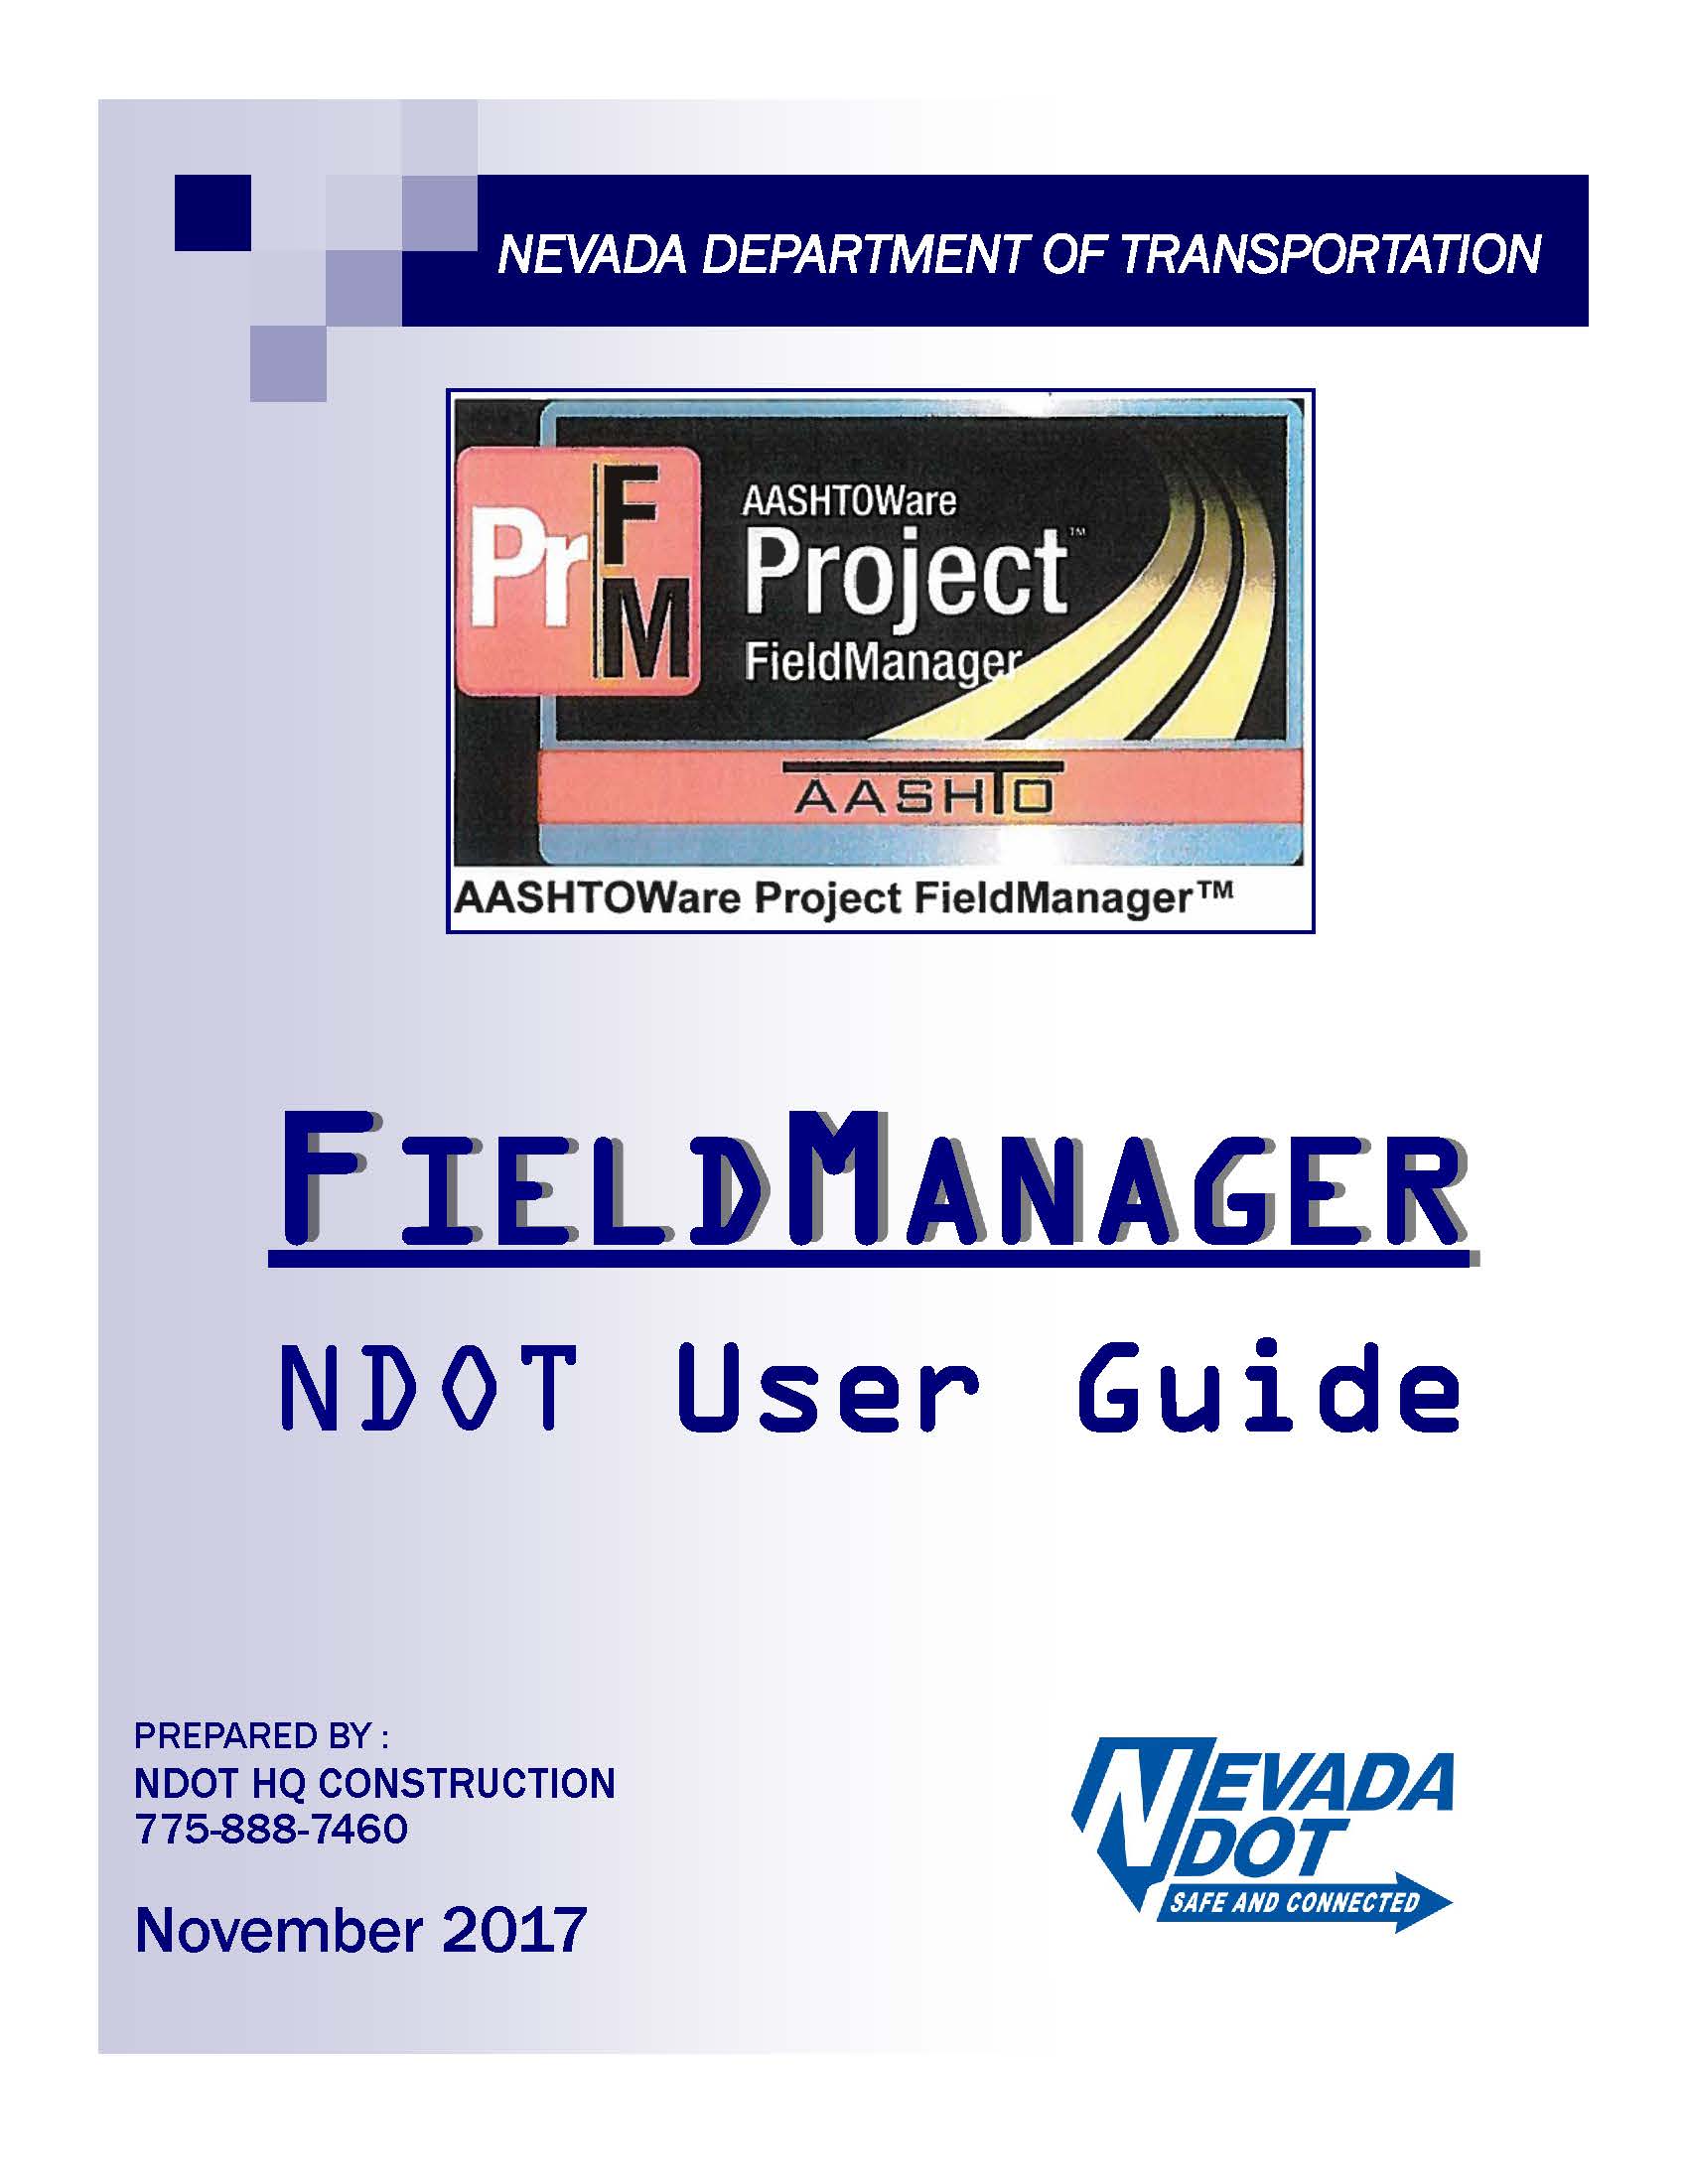 NDOT Logo - FieldManager User Guide | Nevada Department of Transportation